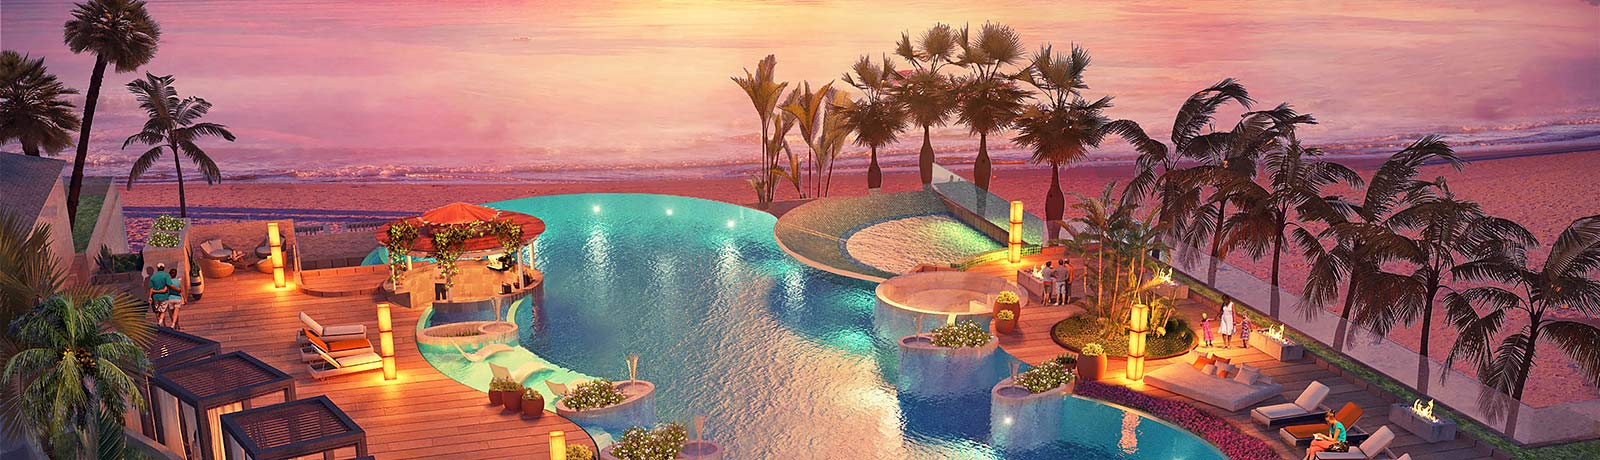 Anichi Resort & Spa: бесконечный бассейн